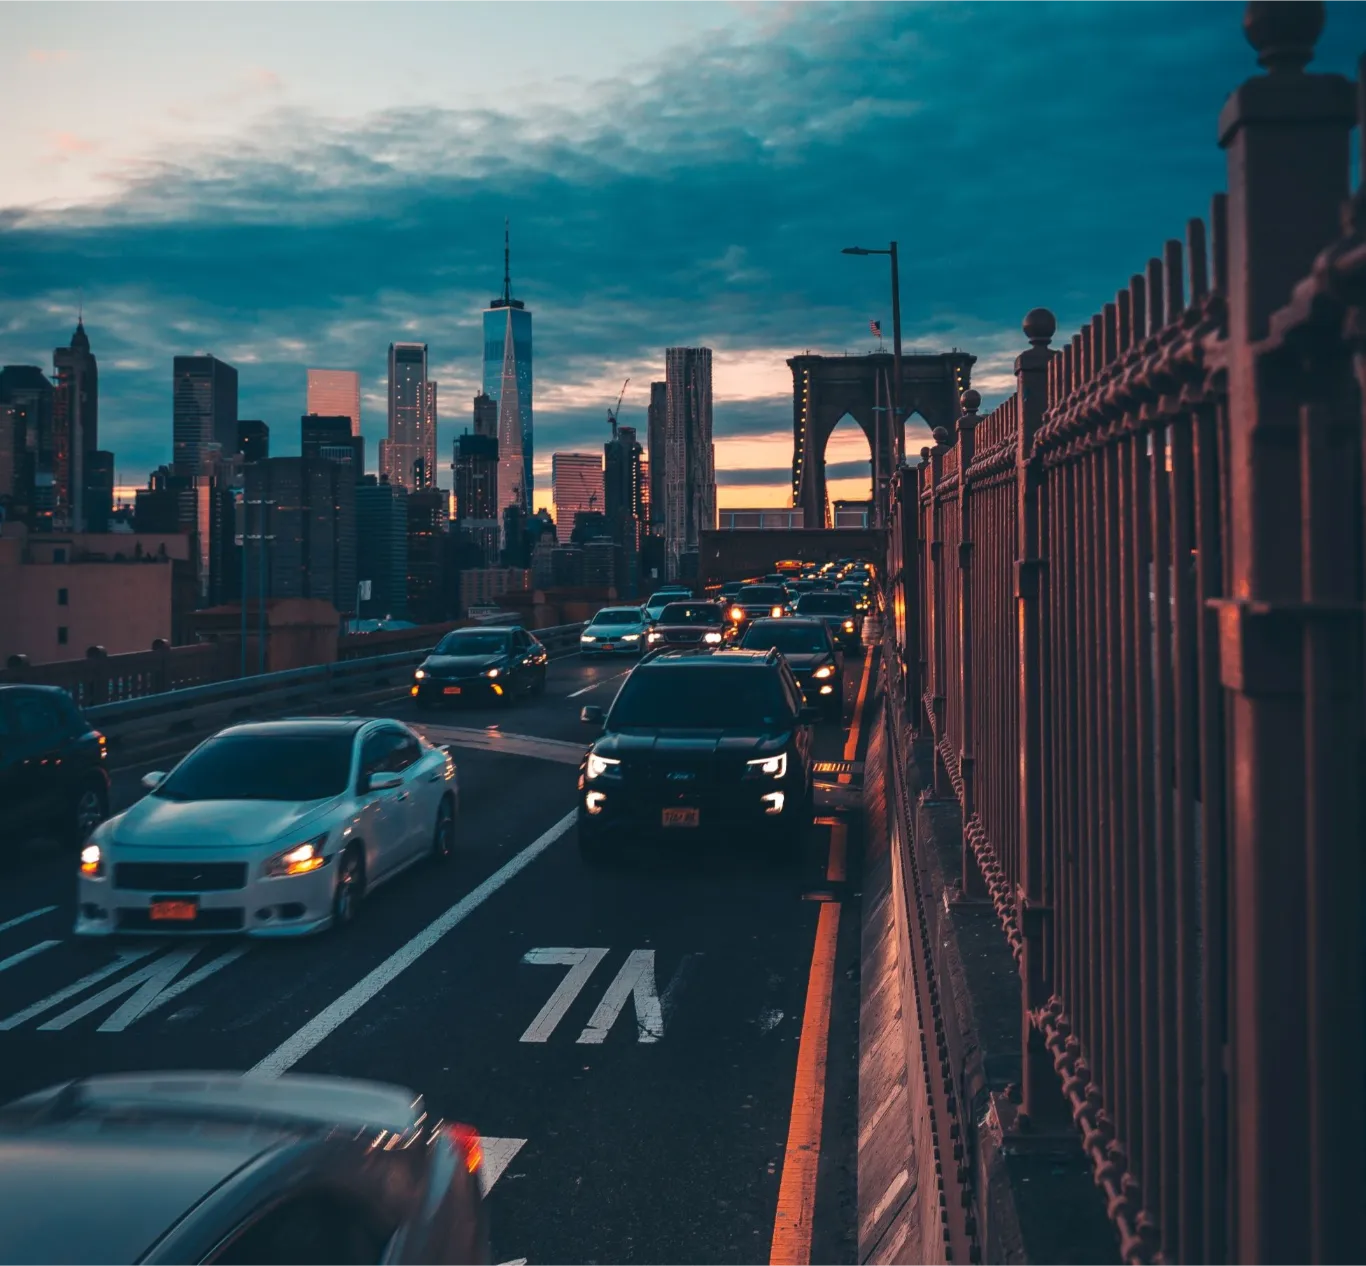 Brooklyn Bridge Afternoon Traffic Jam With the Manhattan Skyline in the Background